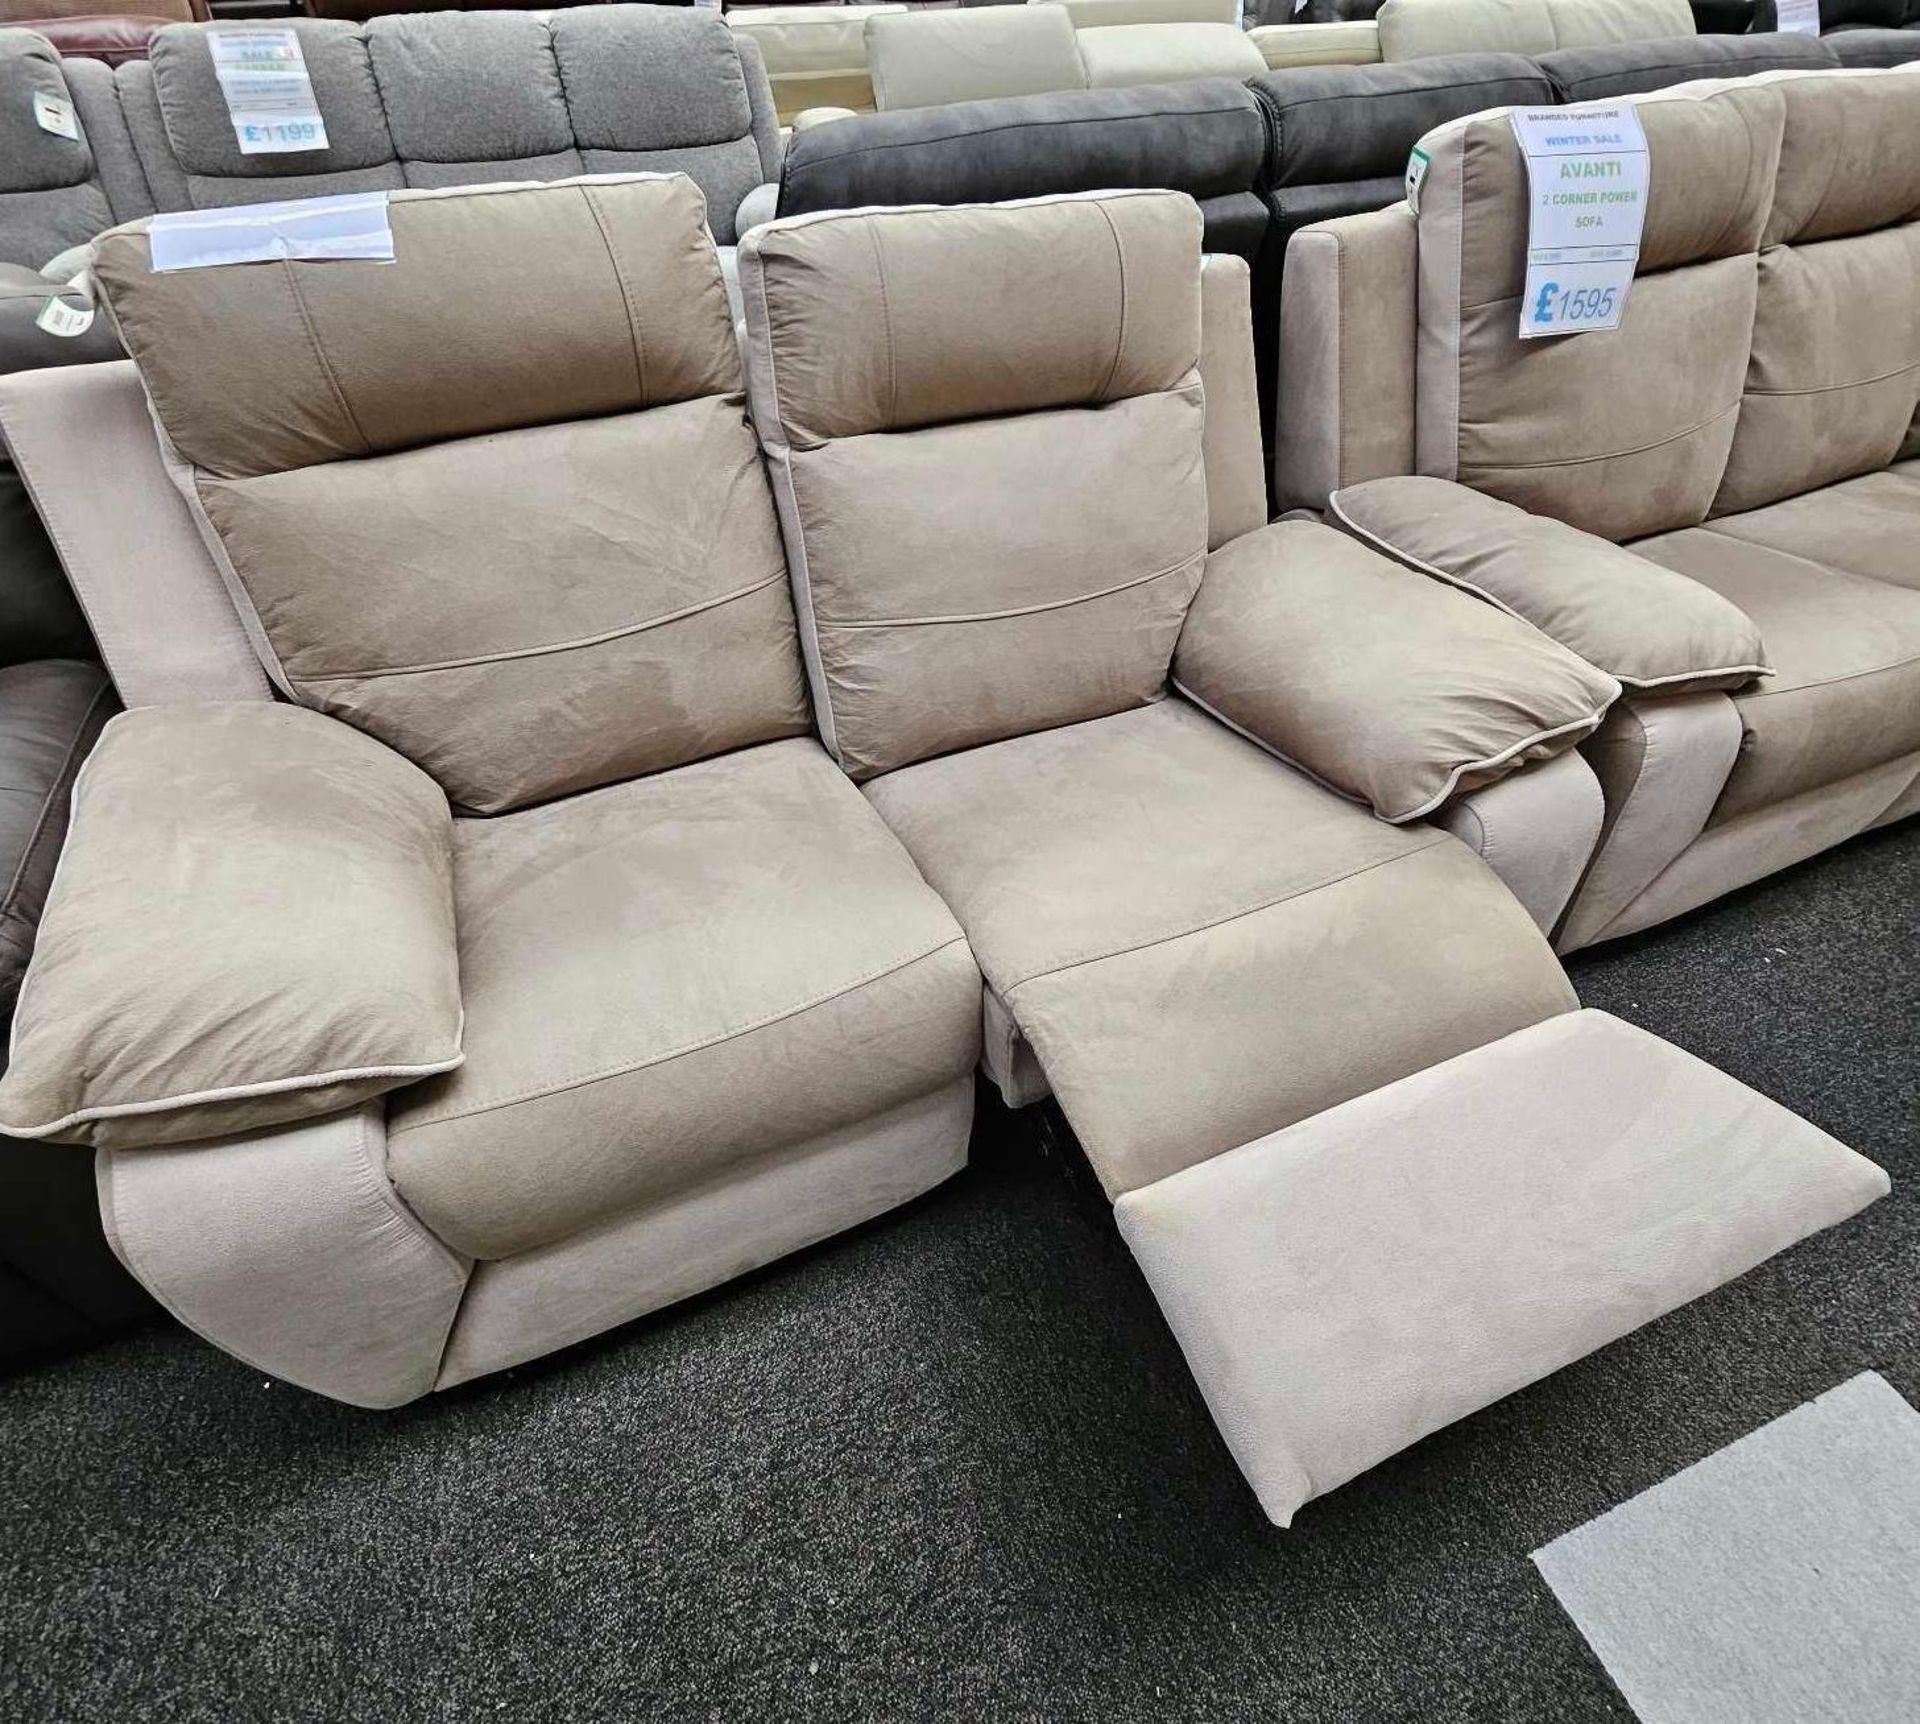 *EX DISPLAY* Sofa house Avanti 2 seater manual recliner sofa in two tone biscuit. - Image 2 of 2